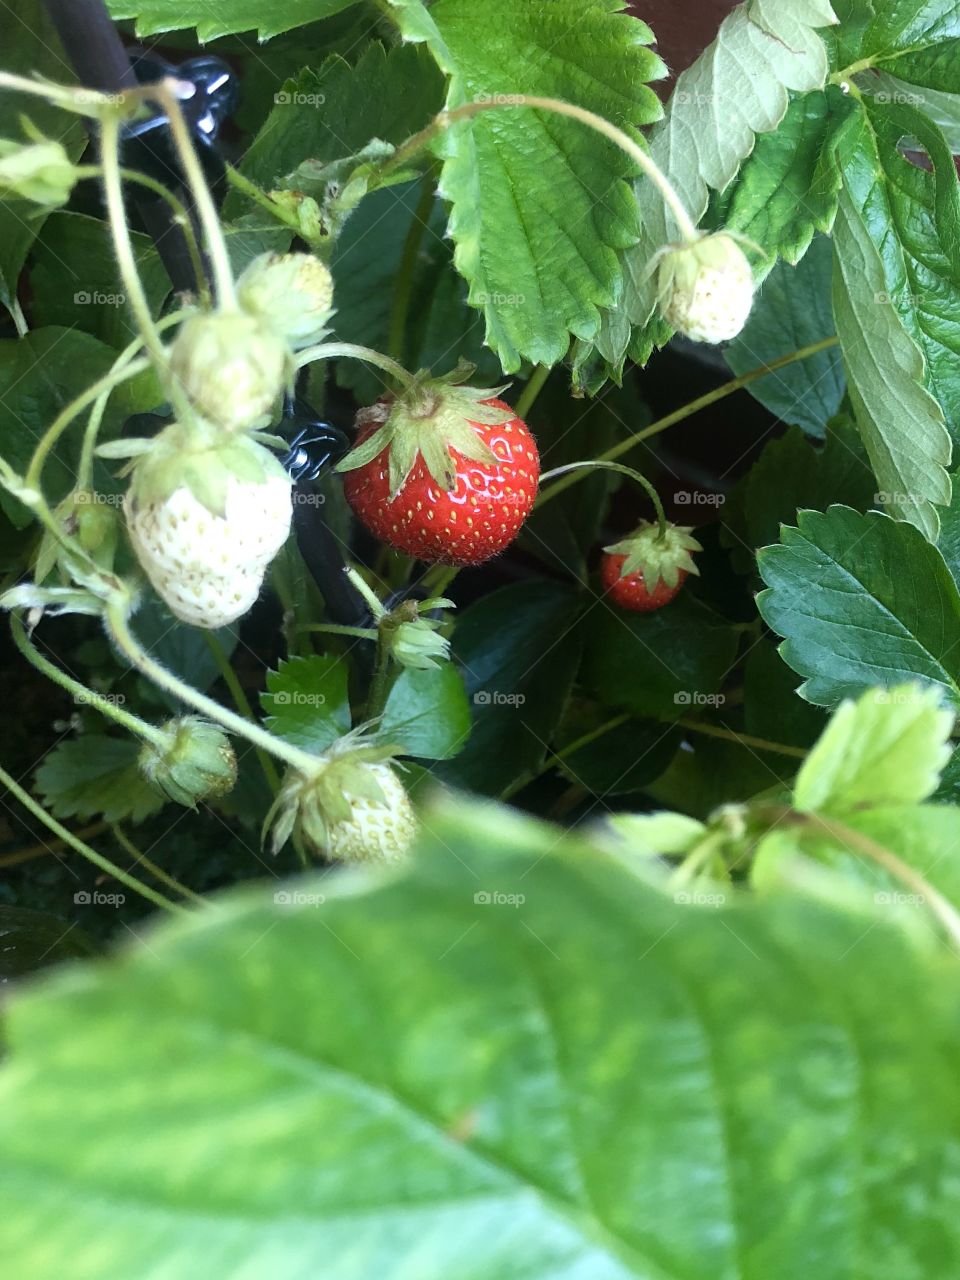 Harvest the strawberries